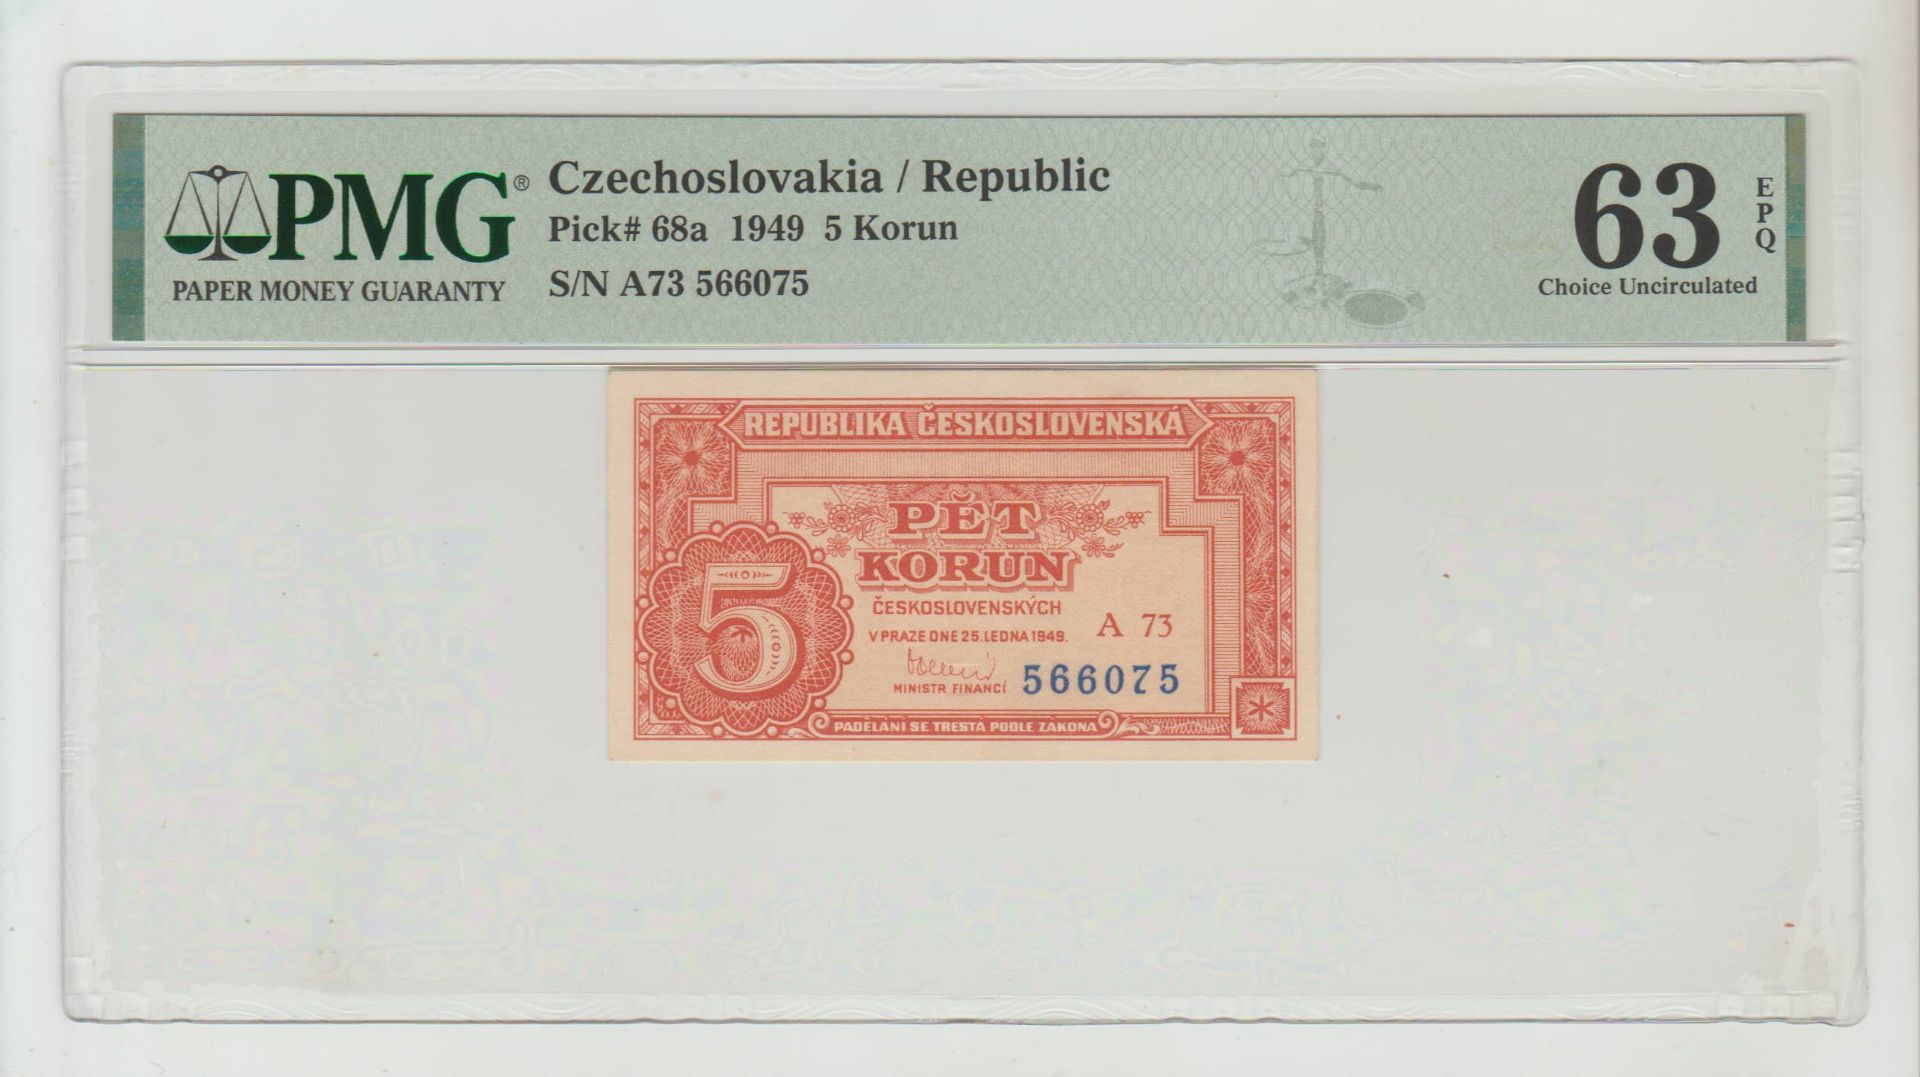 Czechoslovakia/Republic, 5 Korun, 1949 year, PMG 63